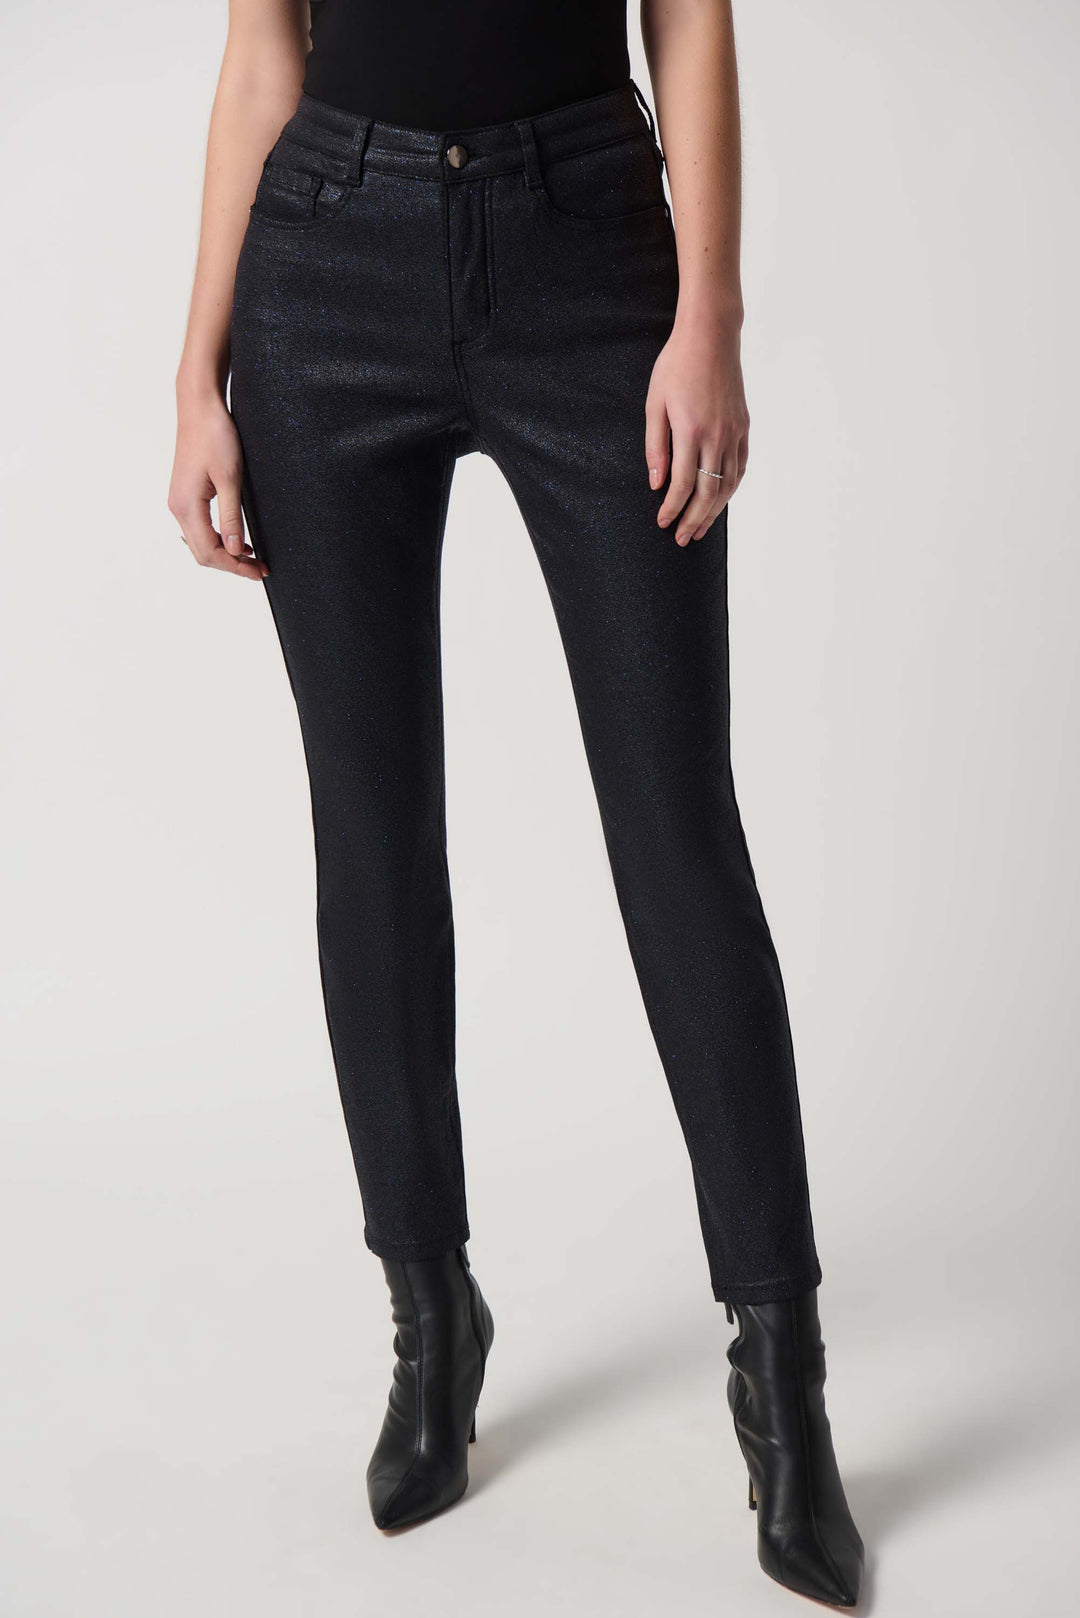 Joseph Ribkoff Blue/Black Trouser Style 234926-192